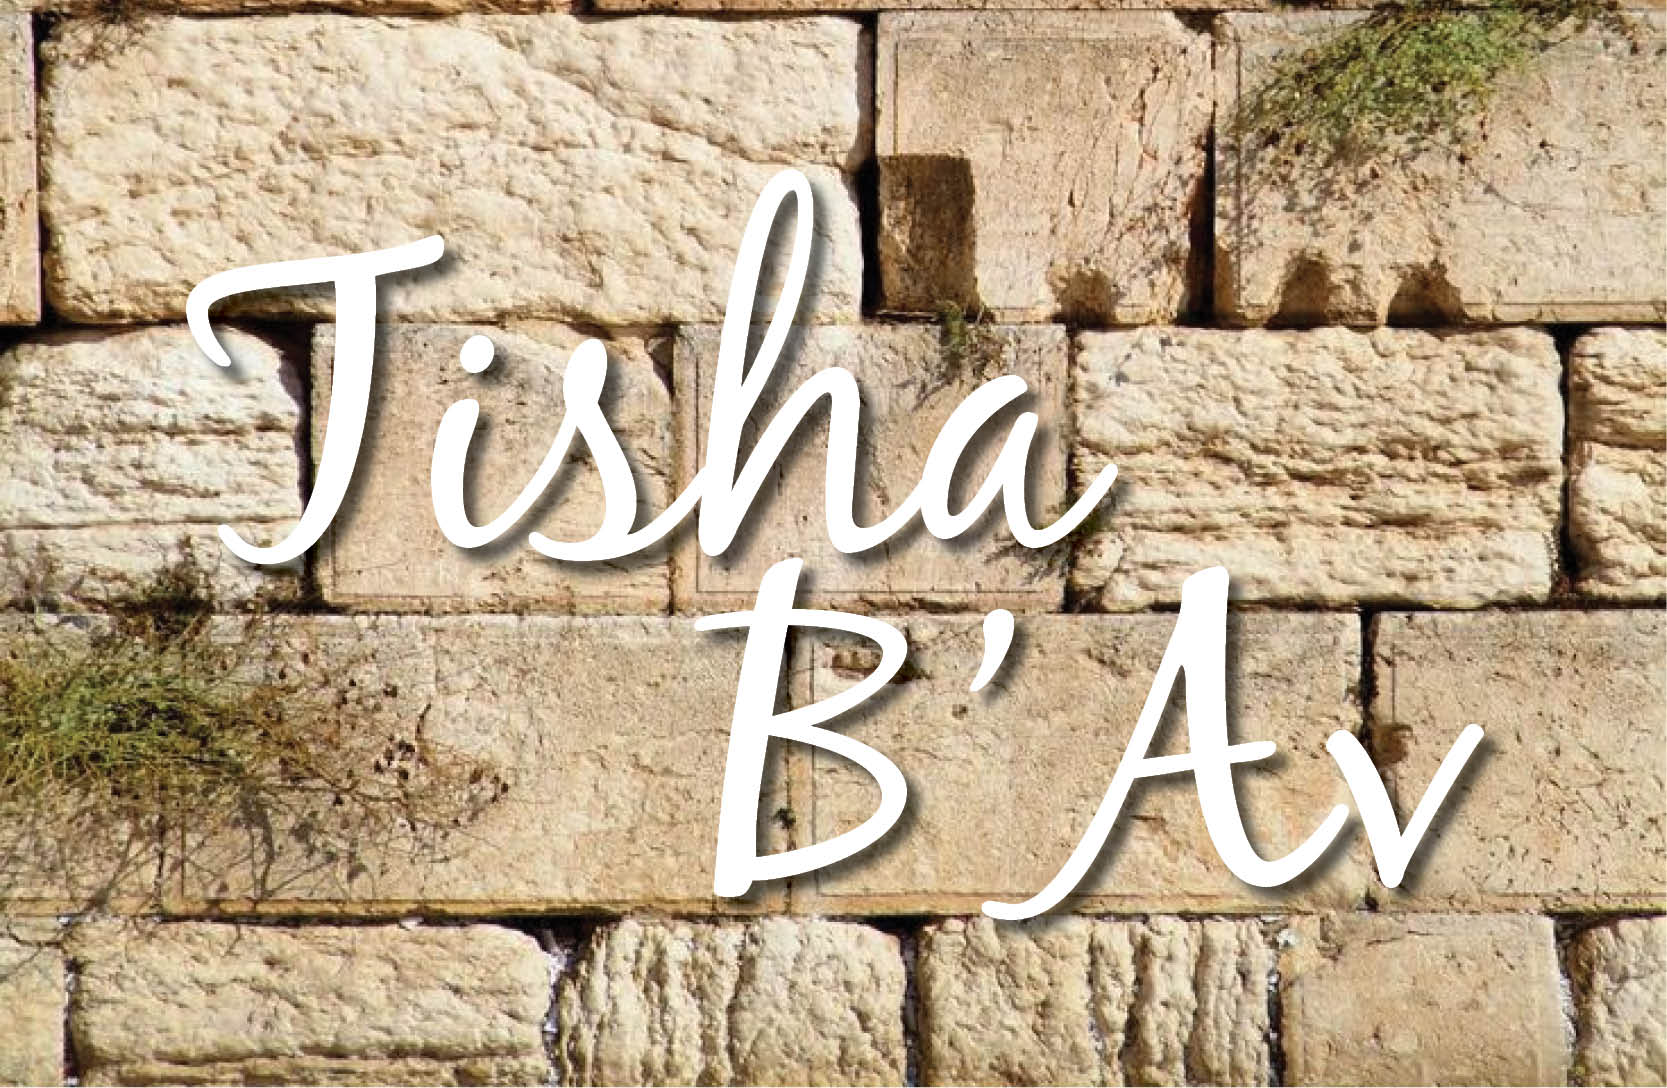 Tisha B'Av Services - Sunday morning and afternoon